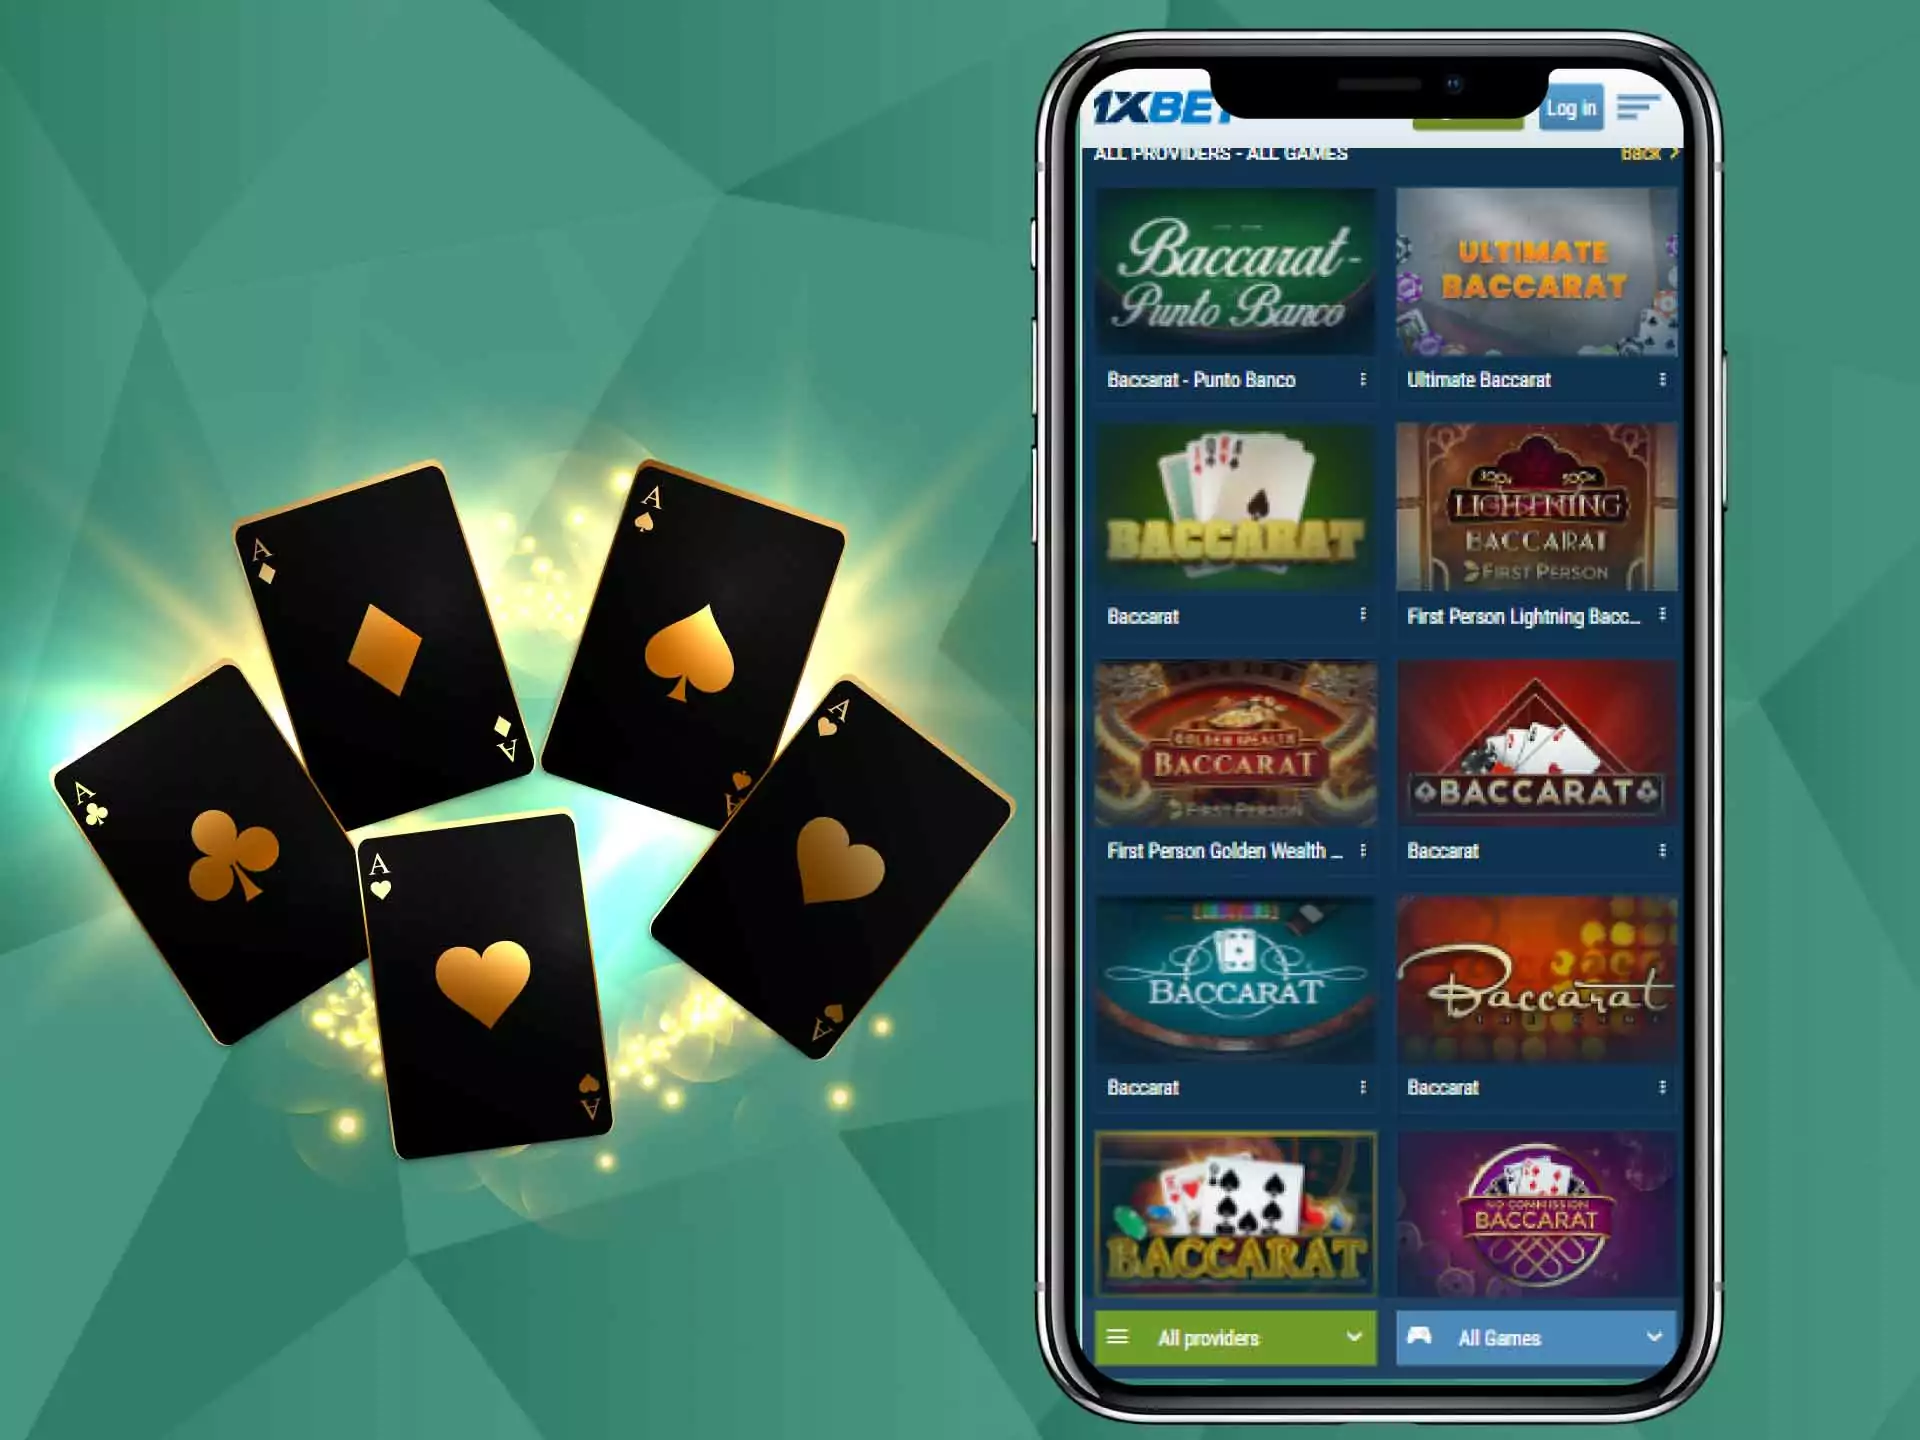 1xBet casino offers you blackjack games.